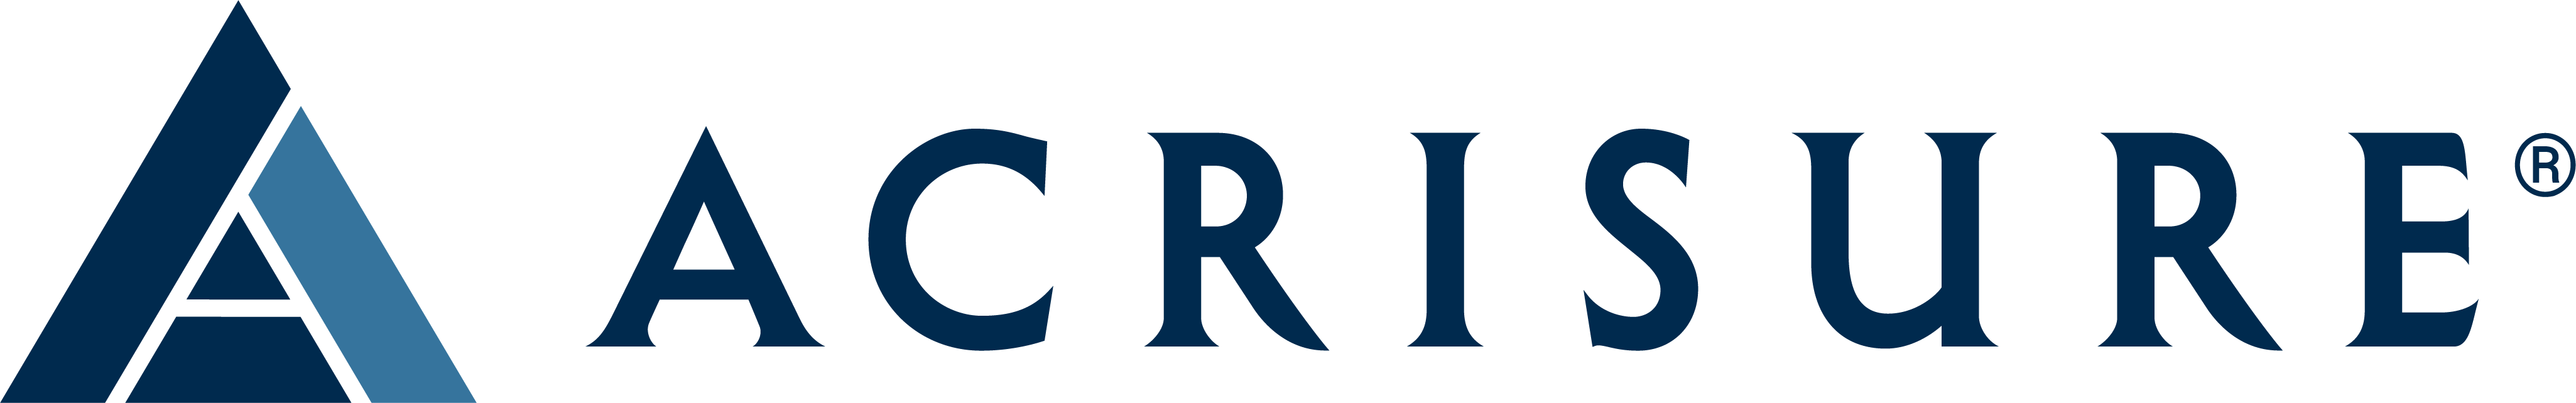 Acrisure Logo Blue Horizontal